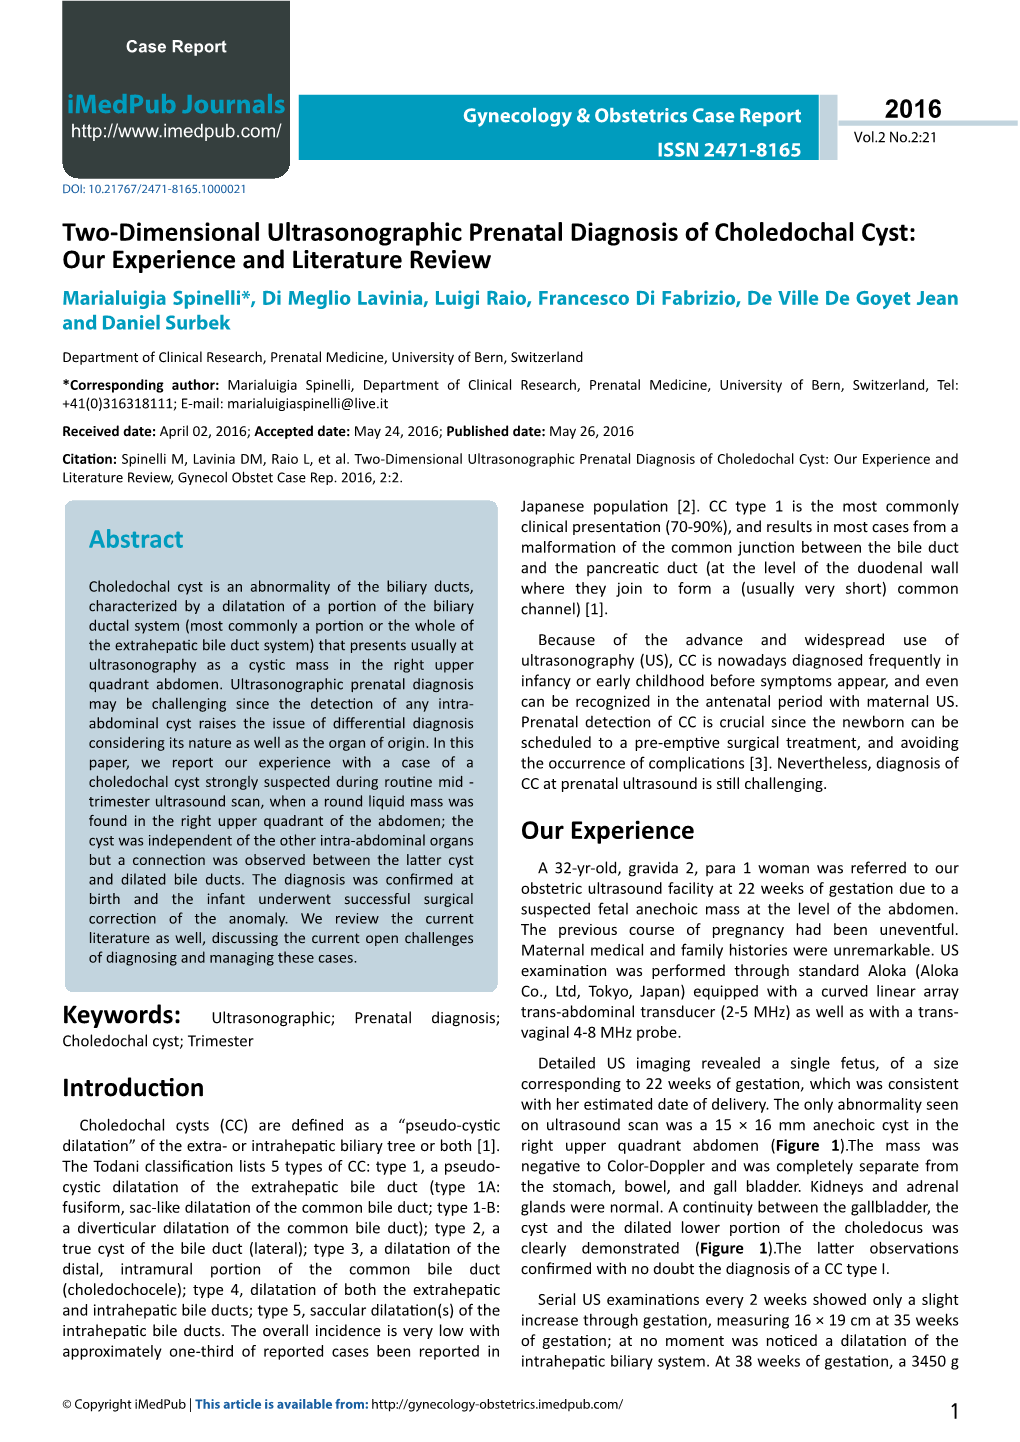 Two-Dimensional Ultrasonographic Prenatal Diagnosis of Choledochal